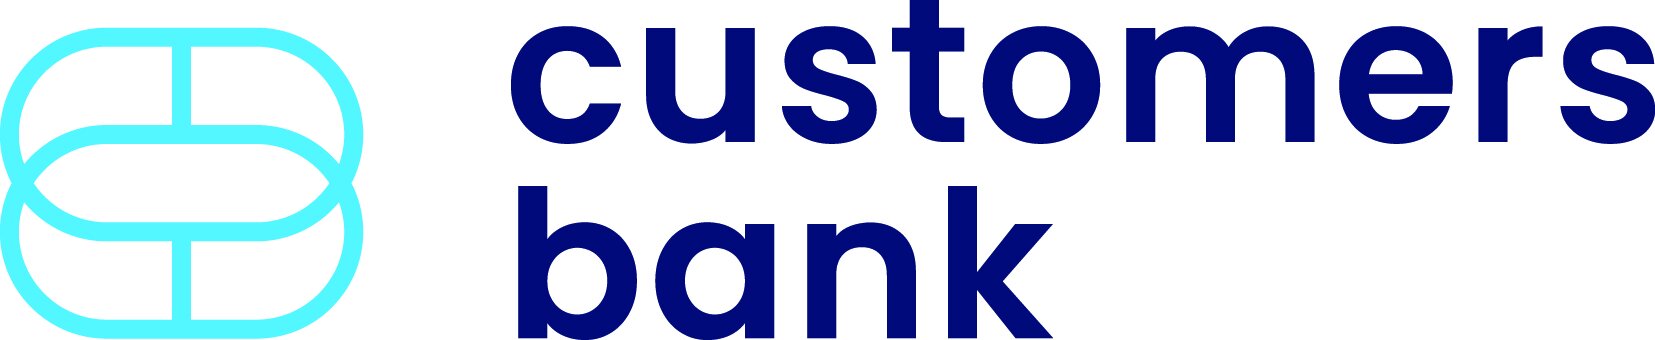 Customers Bank_Logo_Primary_CMYK.jpg